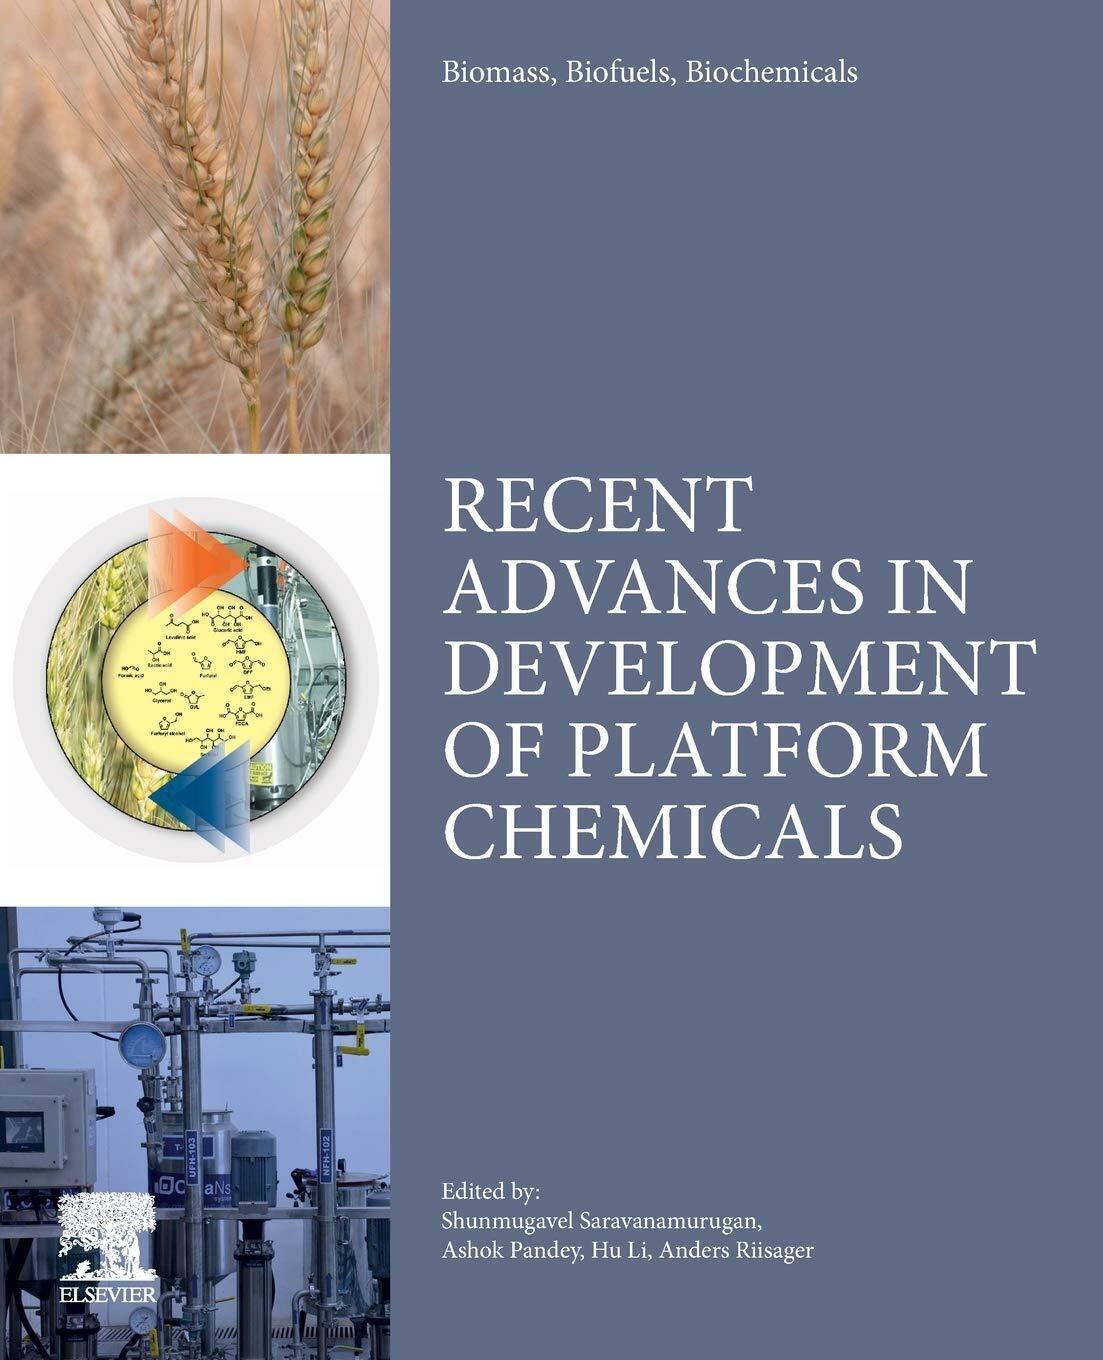 Biomass, Biofuels, Biochemicals - Saravanamurugan S - Elsevier, 2019